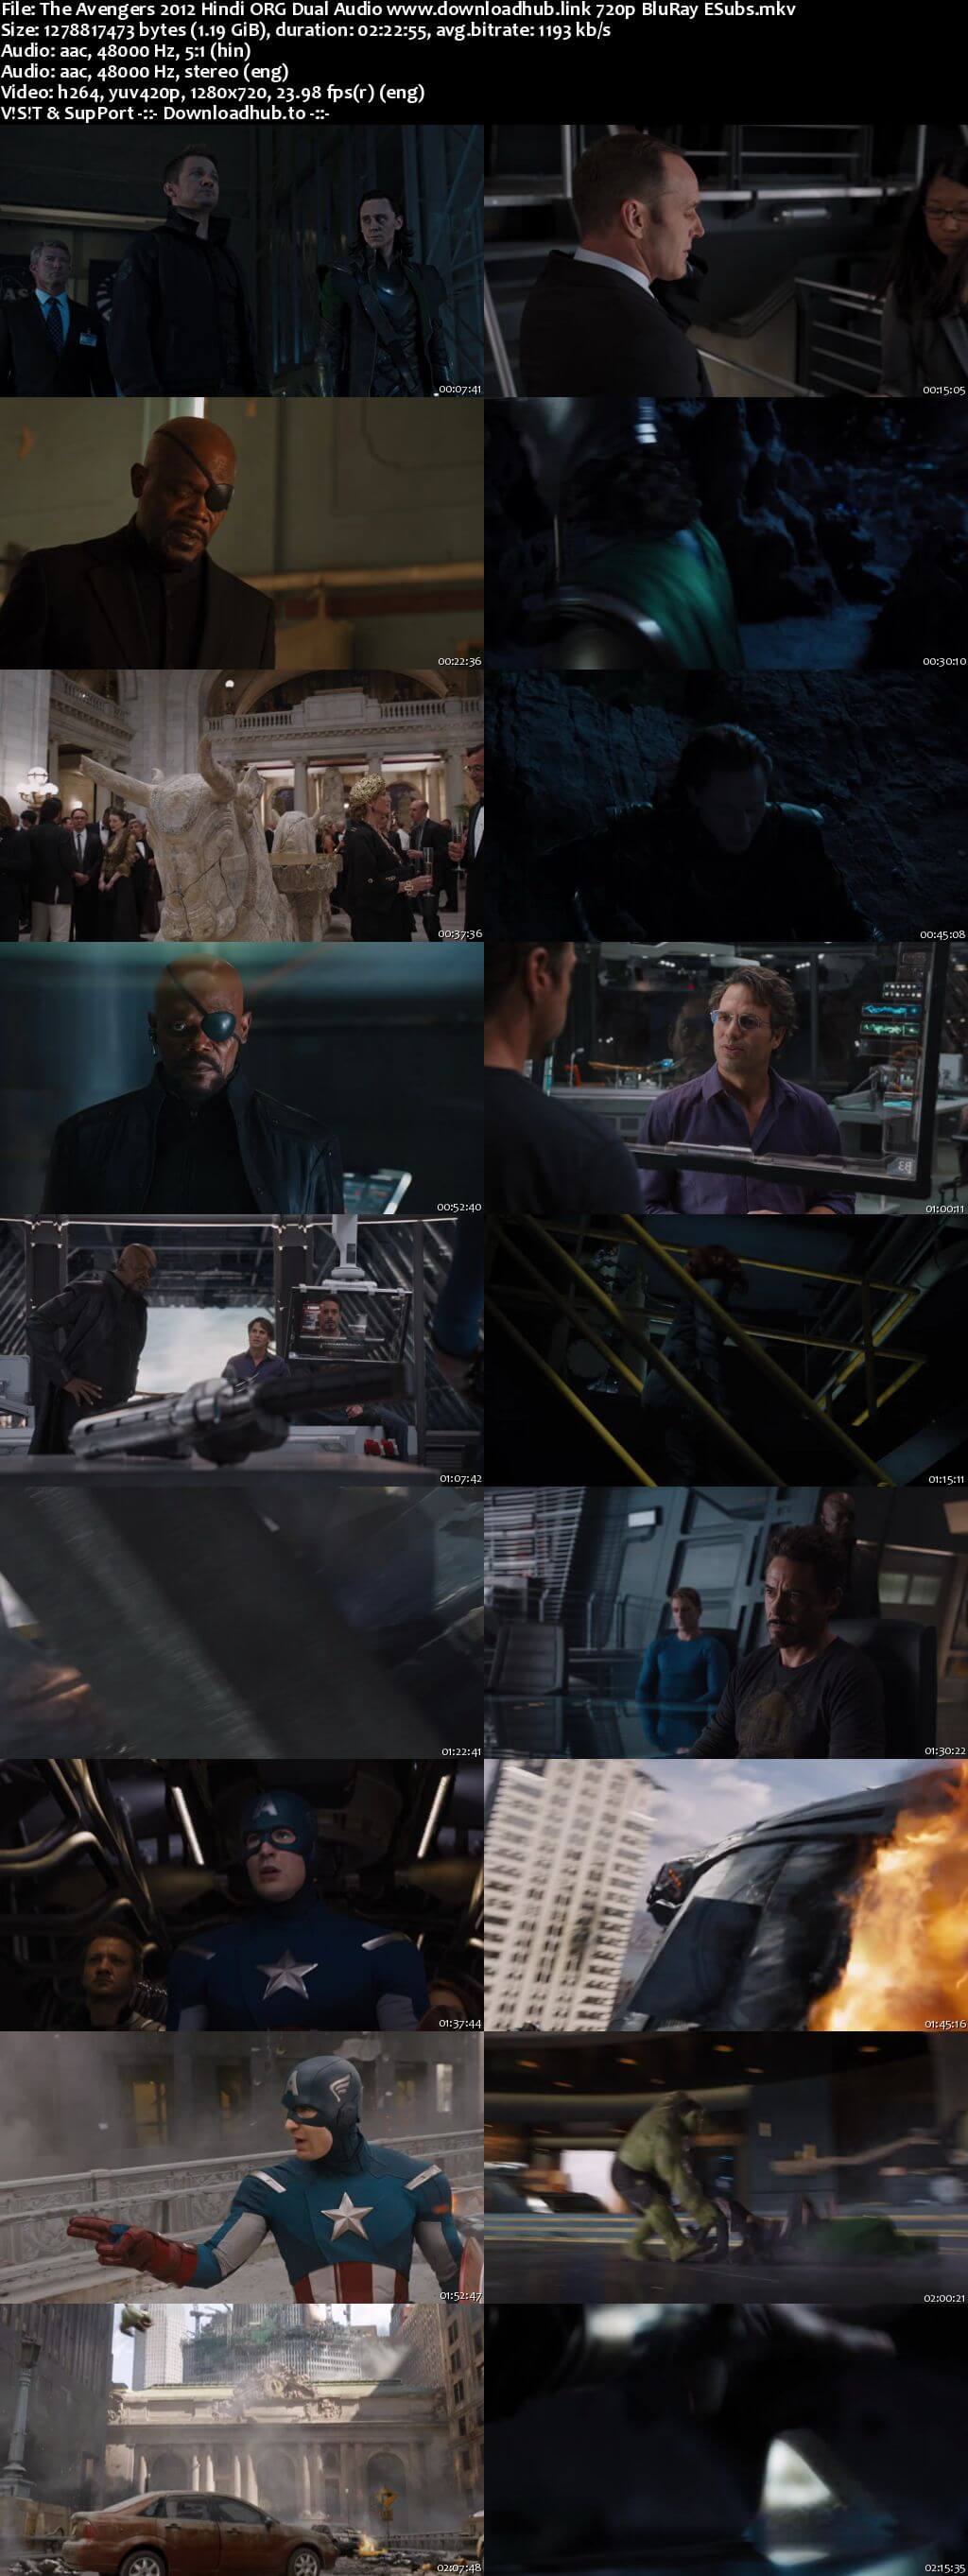 The Avengers 2012 Hindi ORG Dual Audio 720p BluRay ESubs